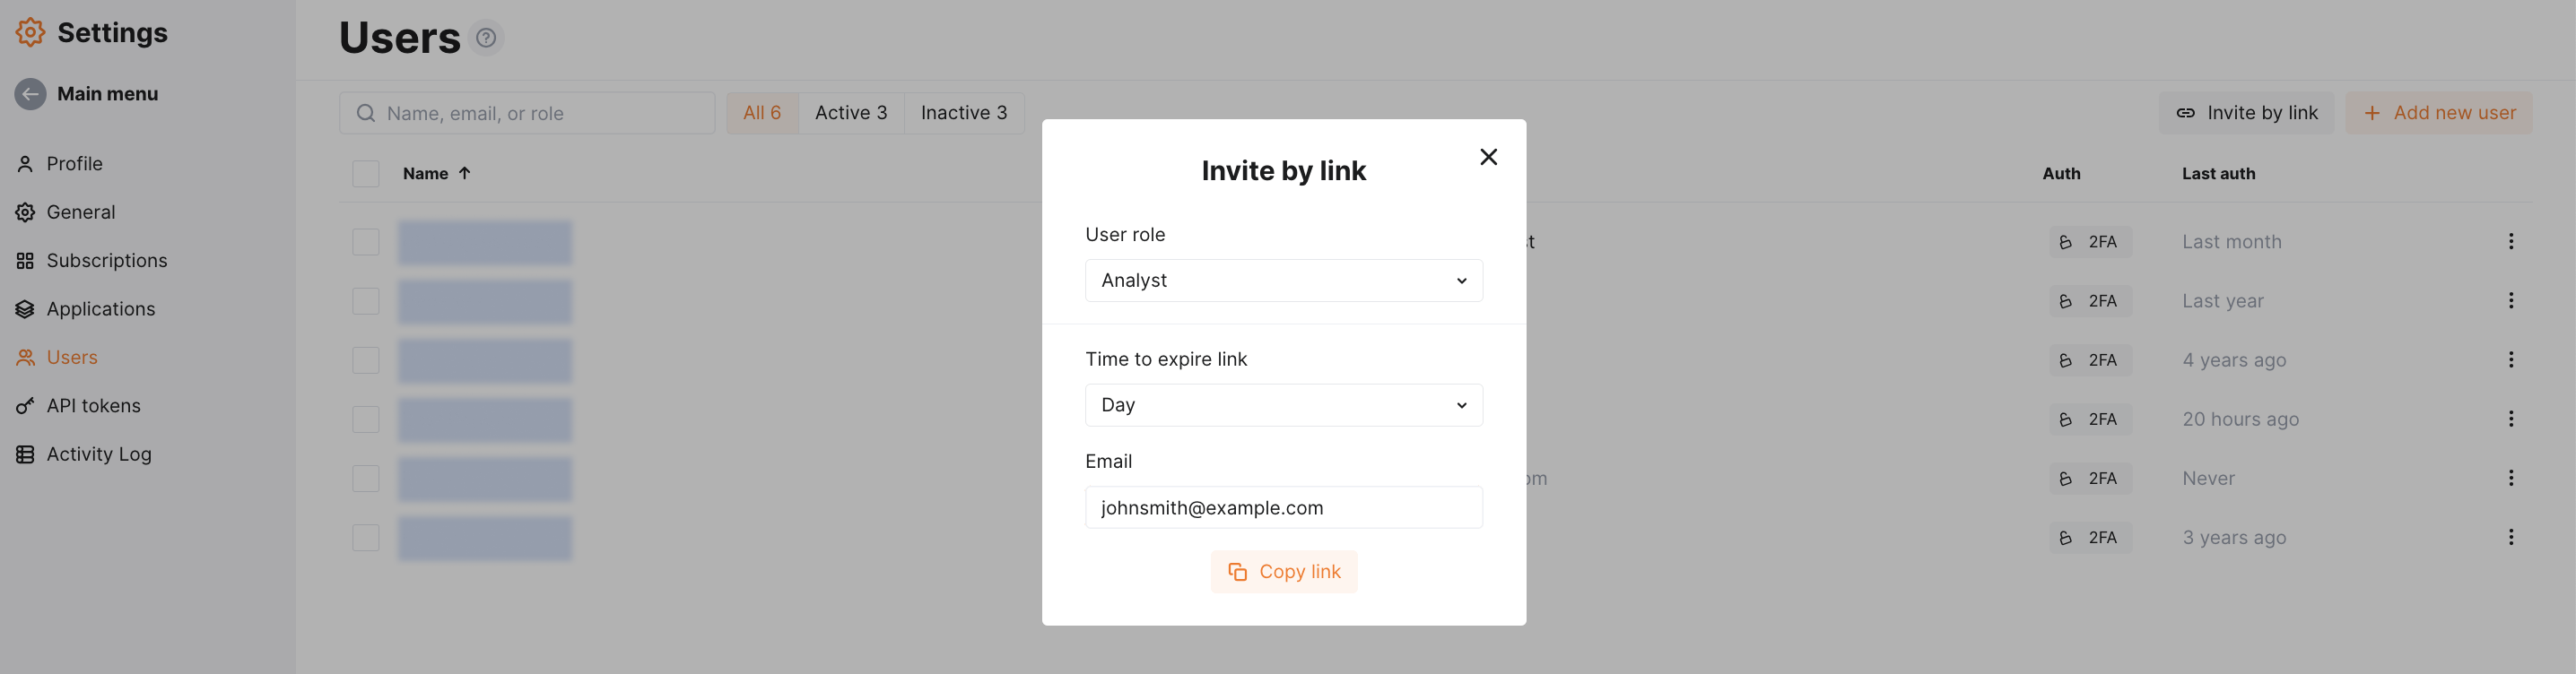 New user inv link